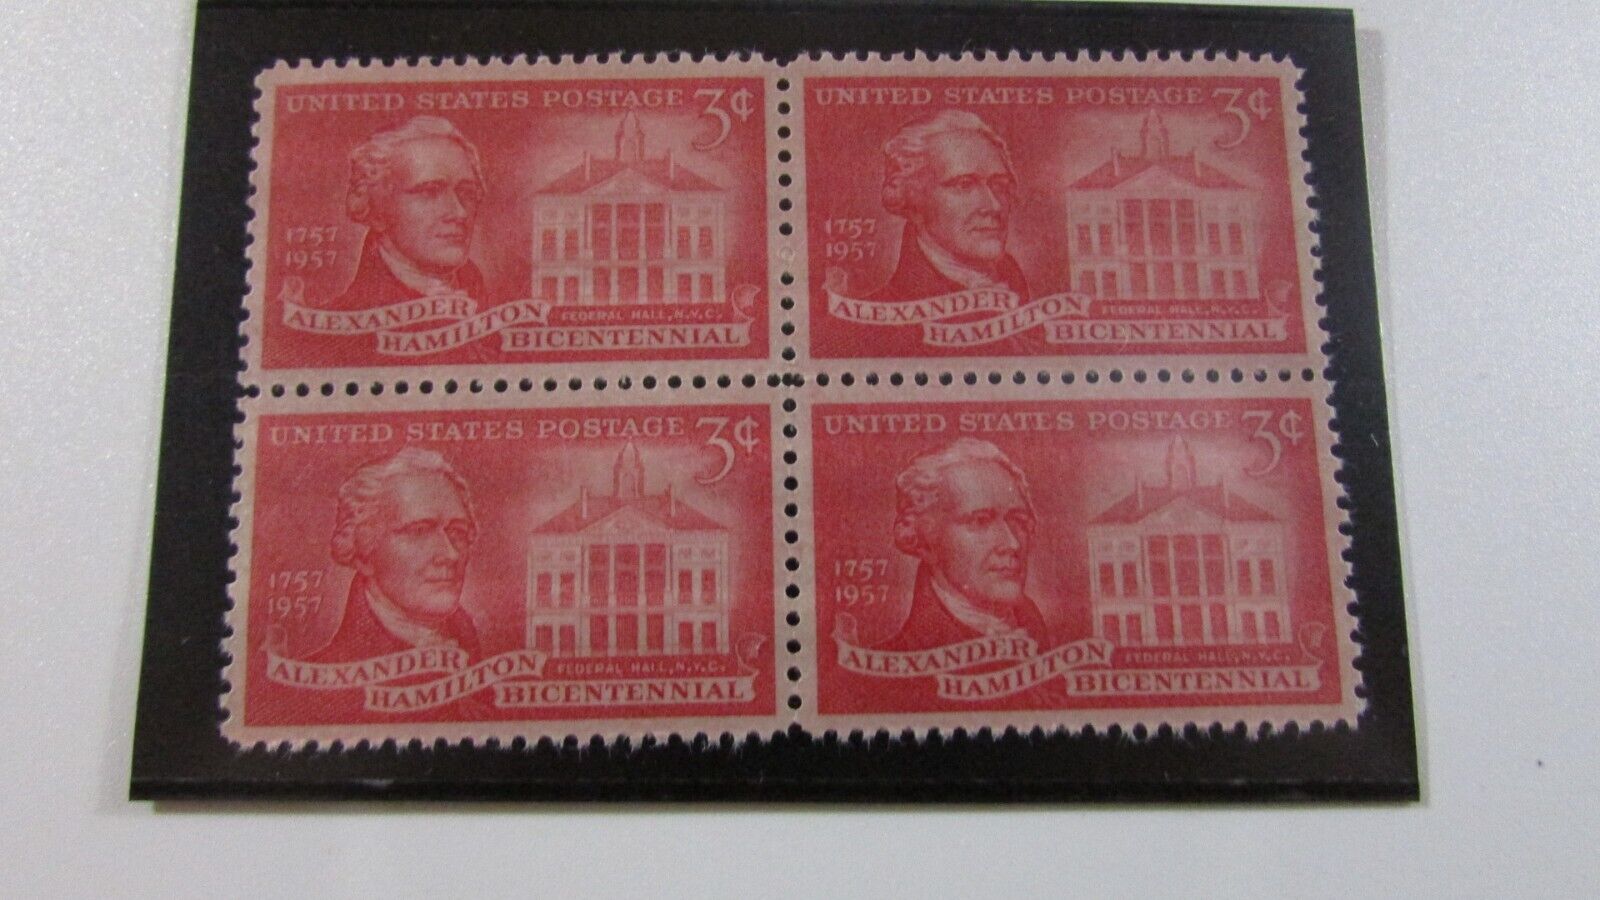 1957 - Alexander Hamilton Bicentennial - 1957 Mint Stamp Block